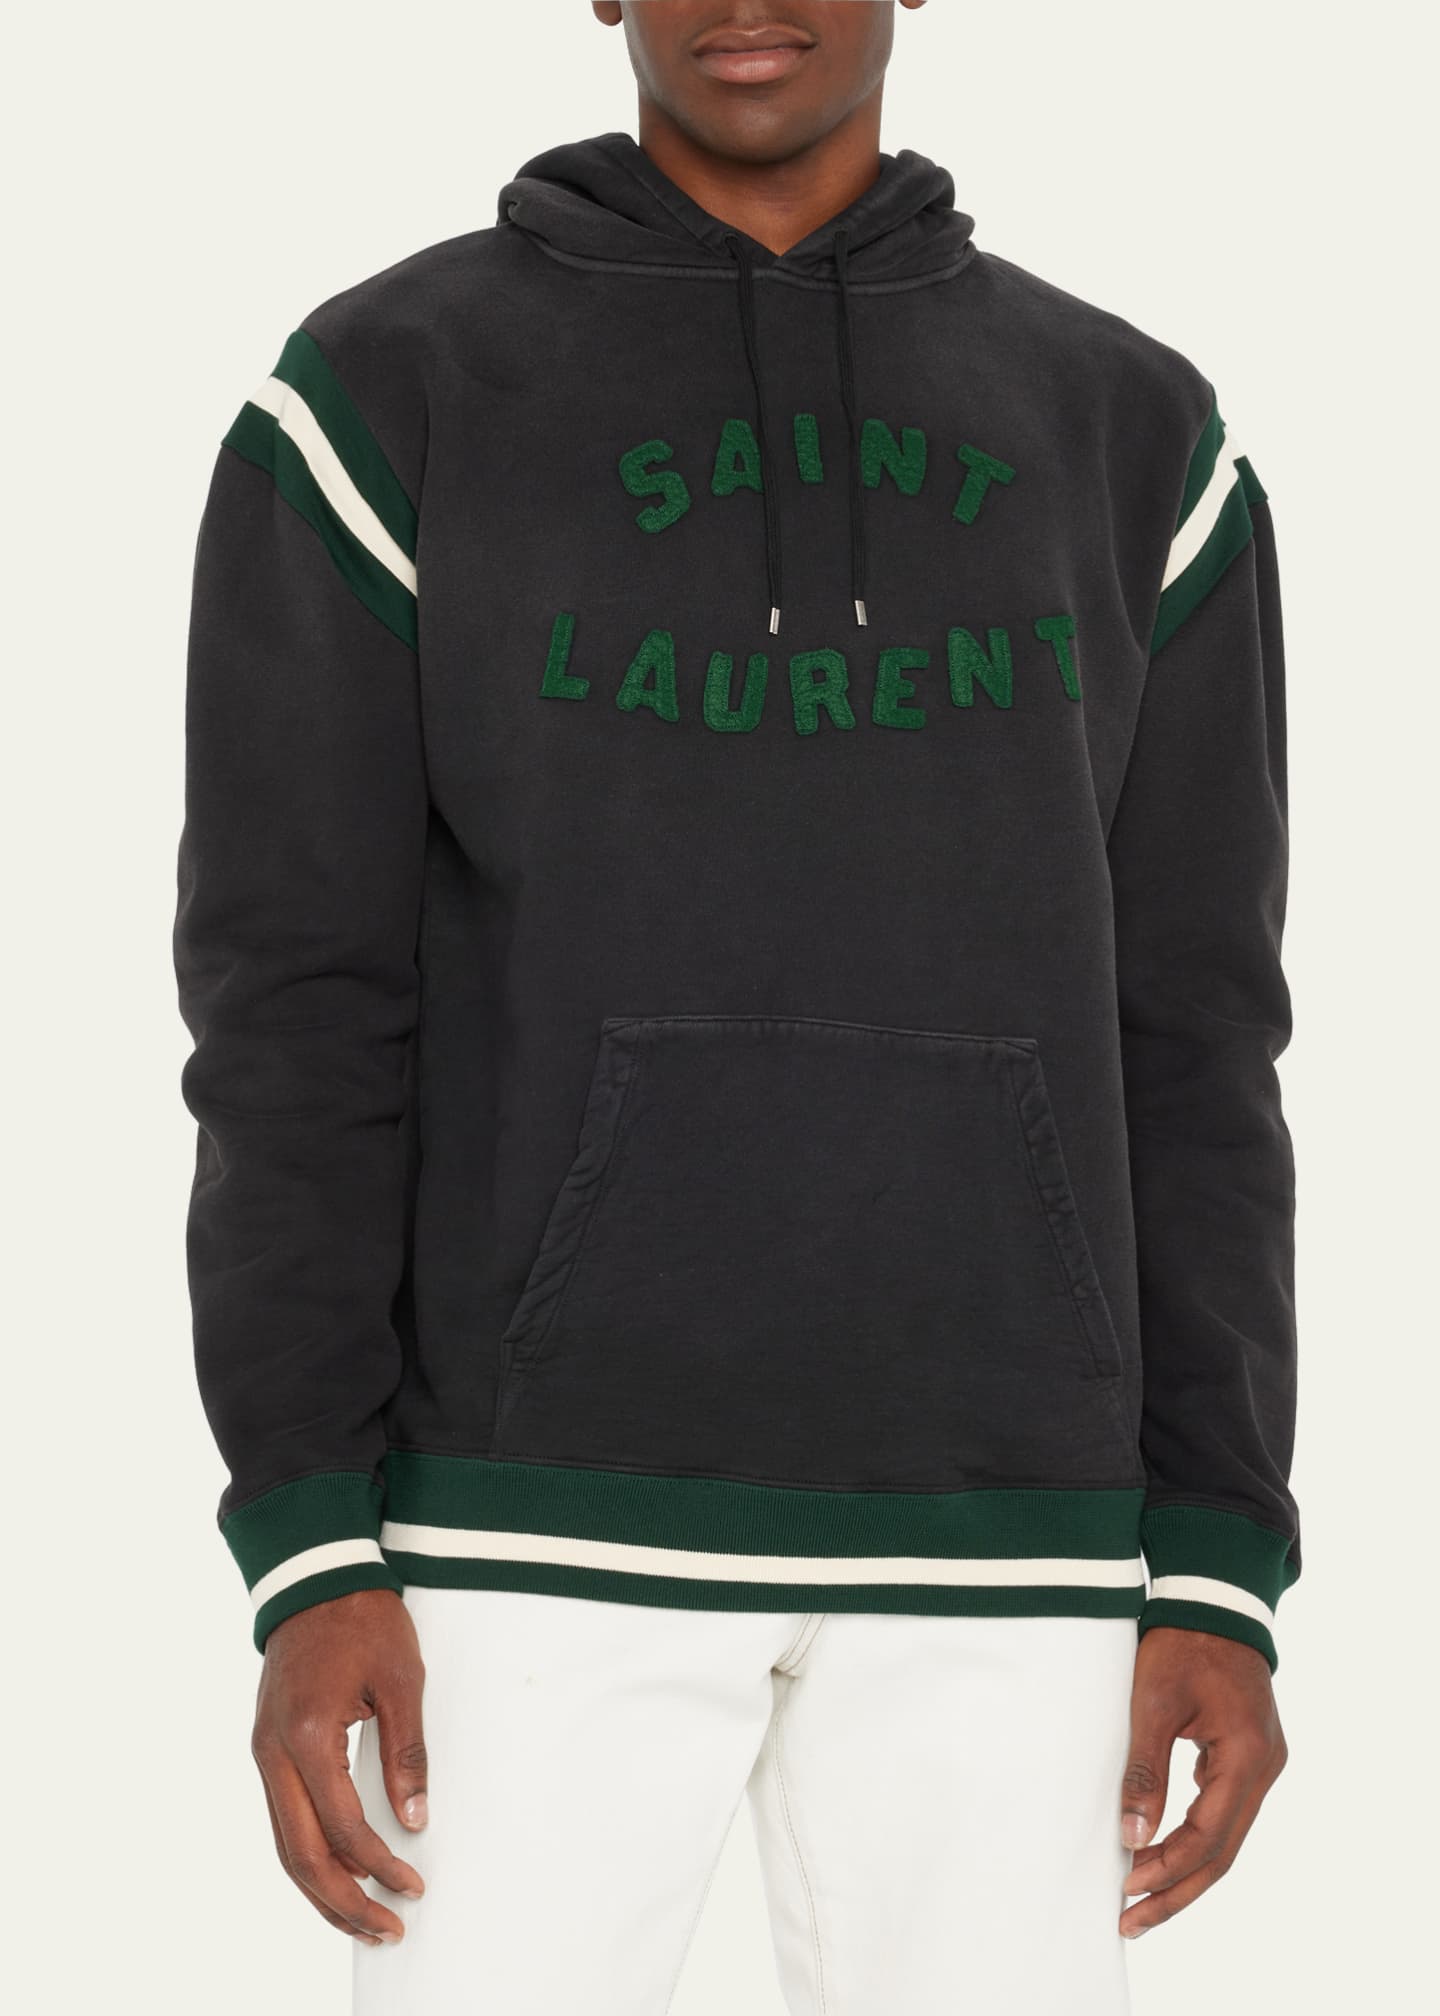 Saint Laurent Men's Embroidered Espadrille Slip-On